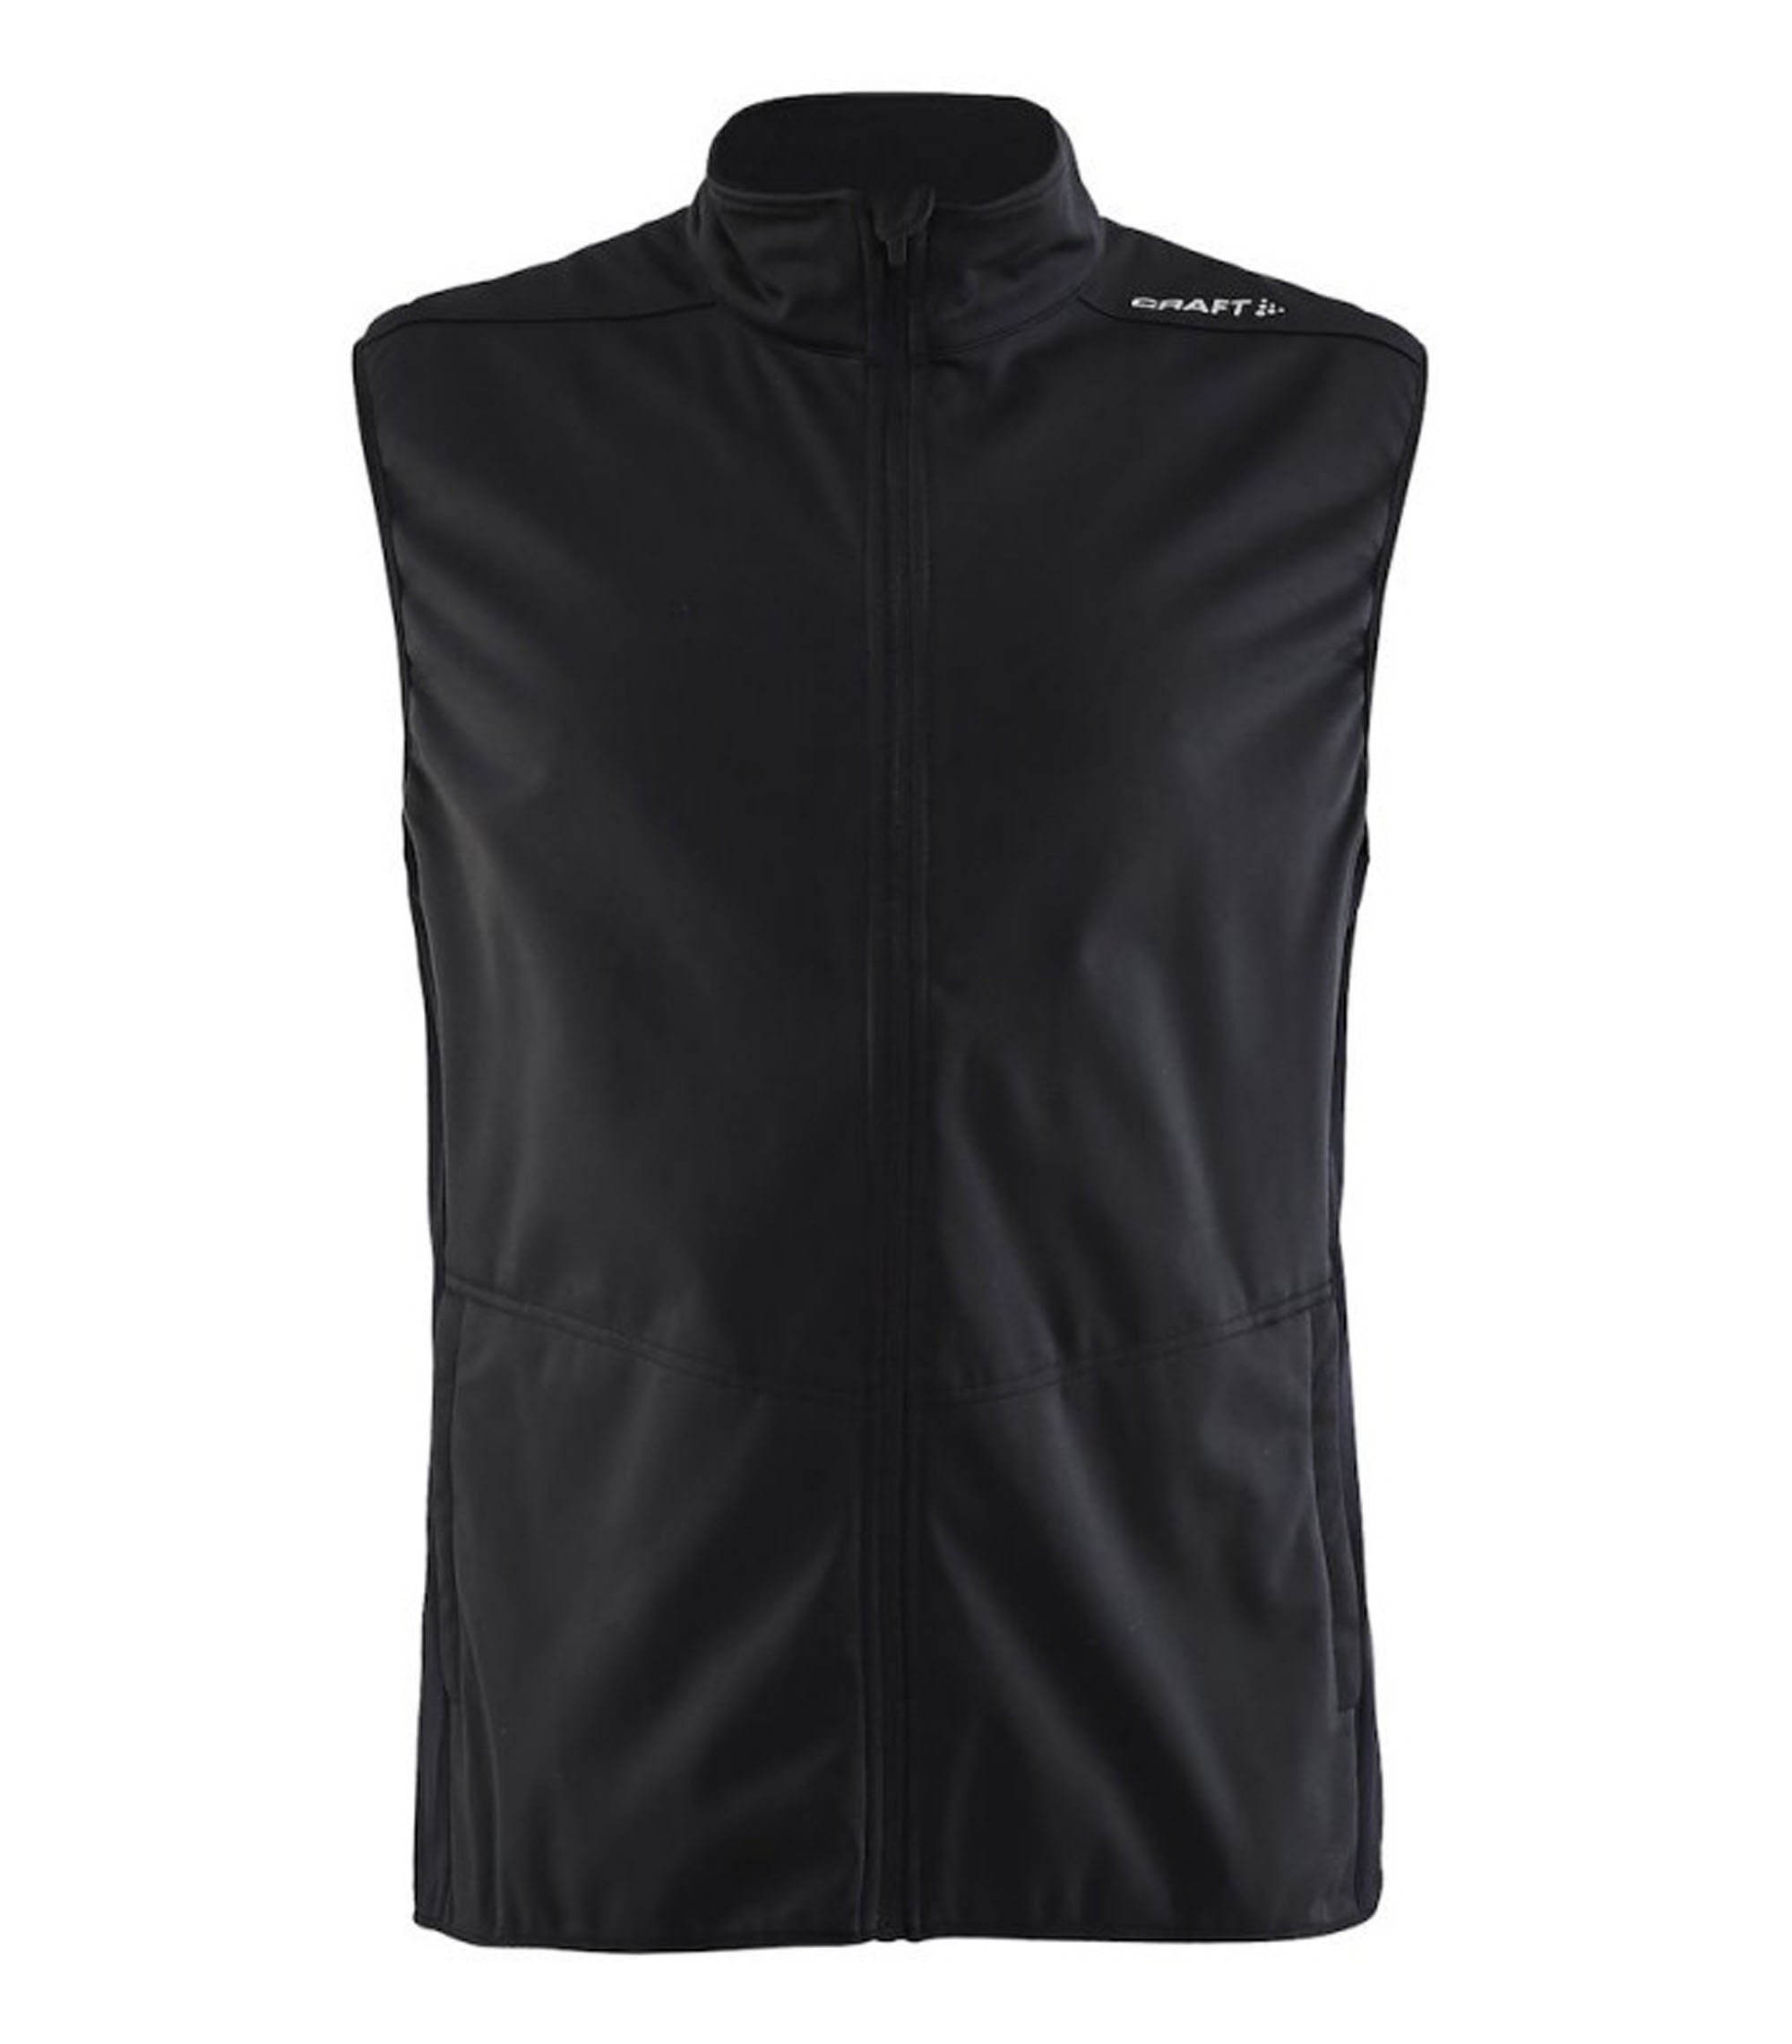 Craft Craft3 Warm Gilet - Pánská Softshellová vesta bez rukávů | Hardloop